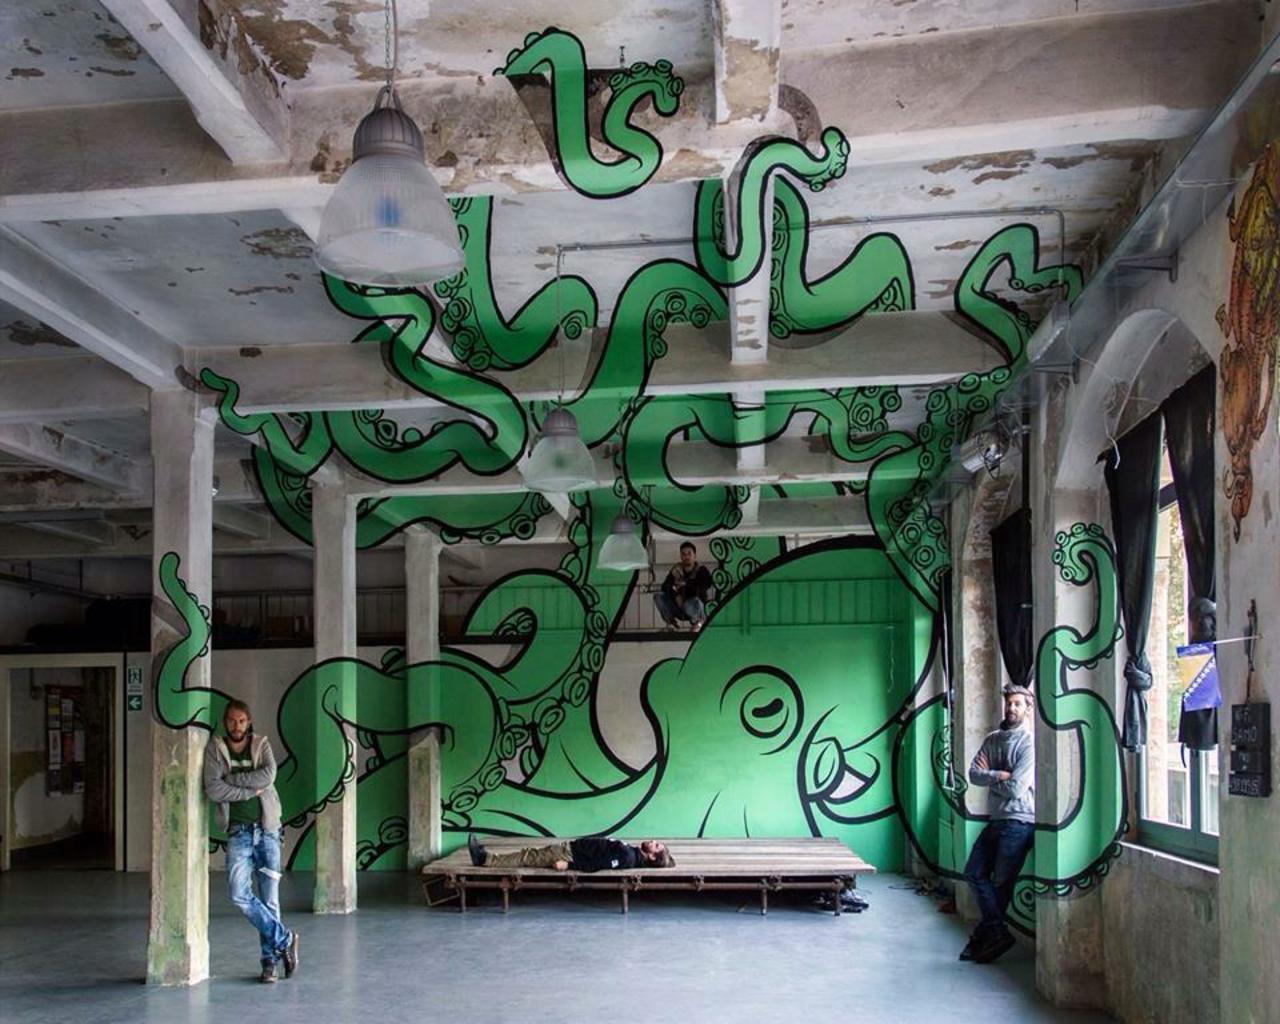 Rt GrootBot: I am Groot. I___am___Groot_: Anamorphic Street Art by TrulyDesign

#3D #art #graffiti #streetart http://t.co/34IGt5tEiz